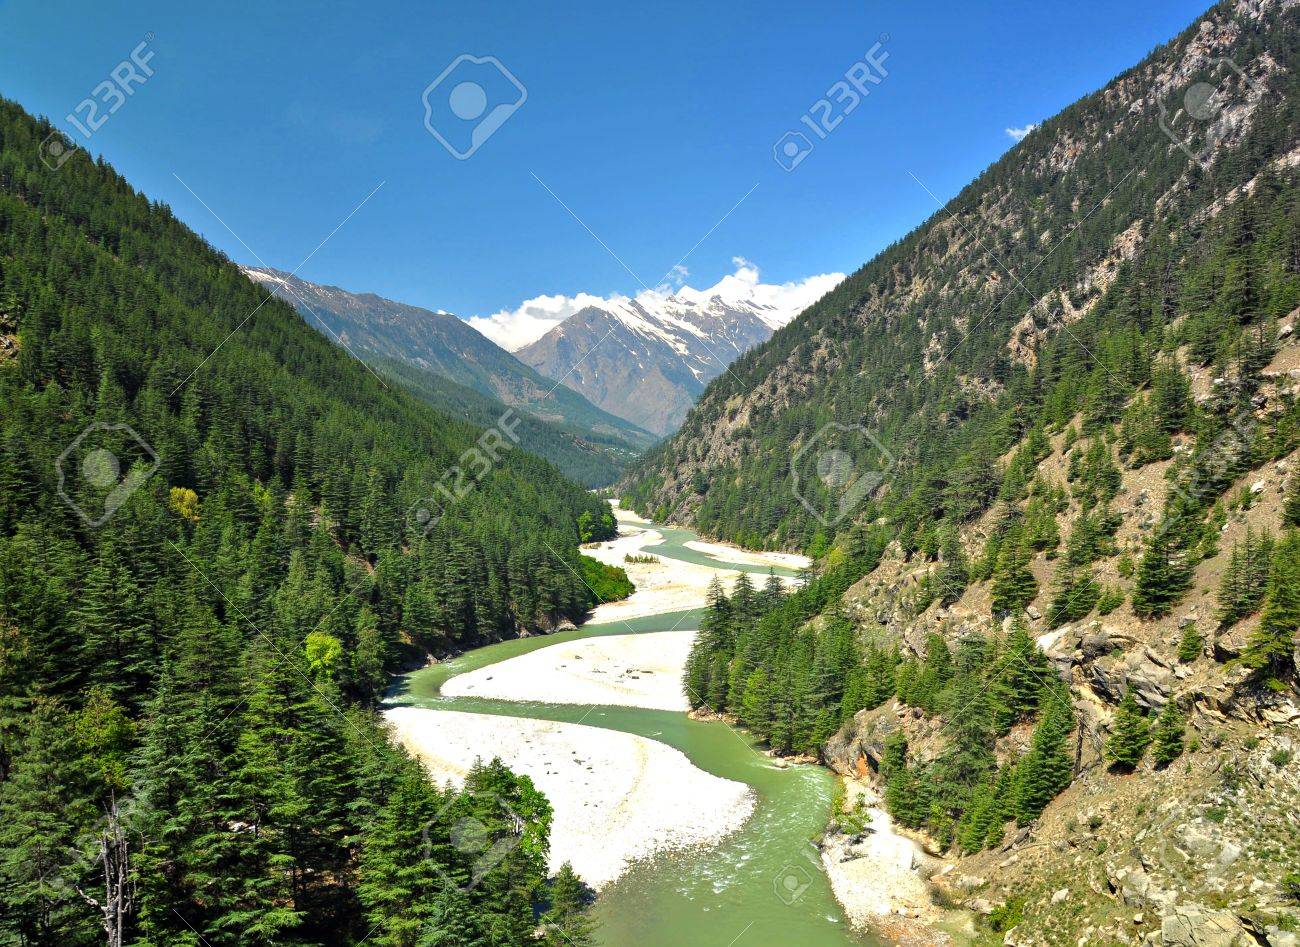 16570836-river-meander-in-deep-mountain-valley.jpg